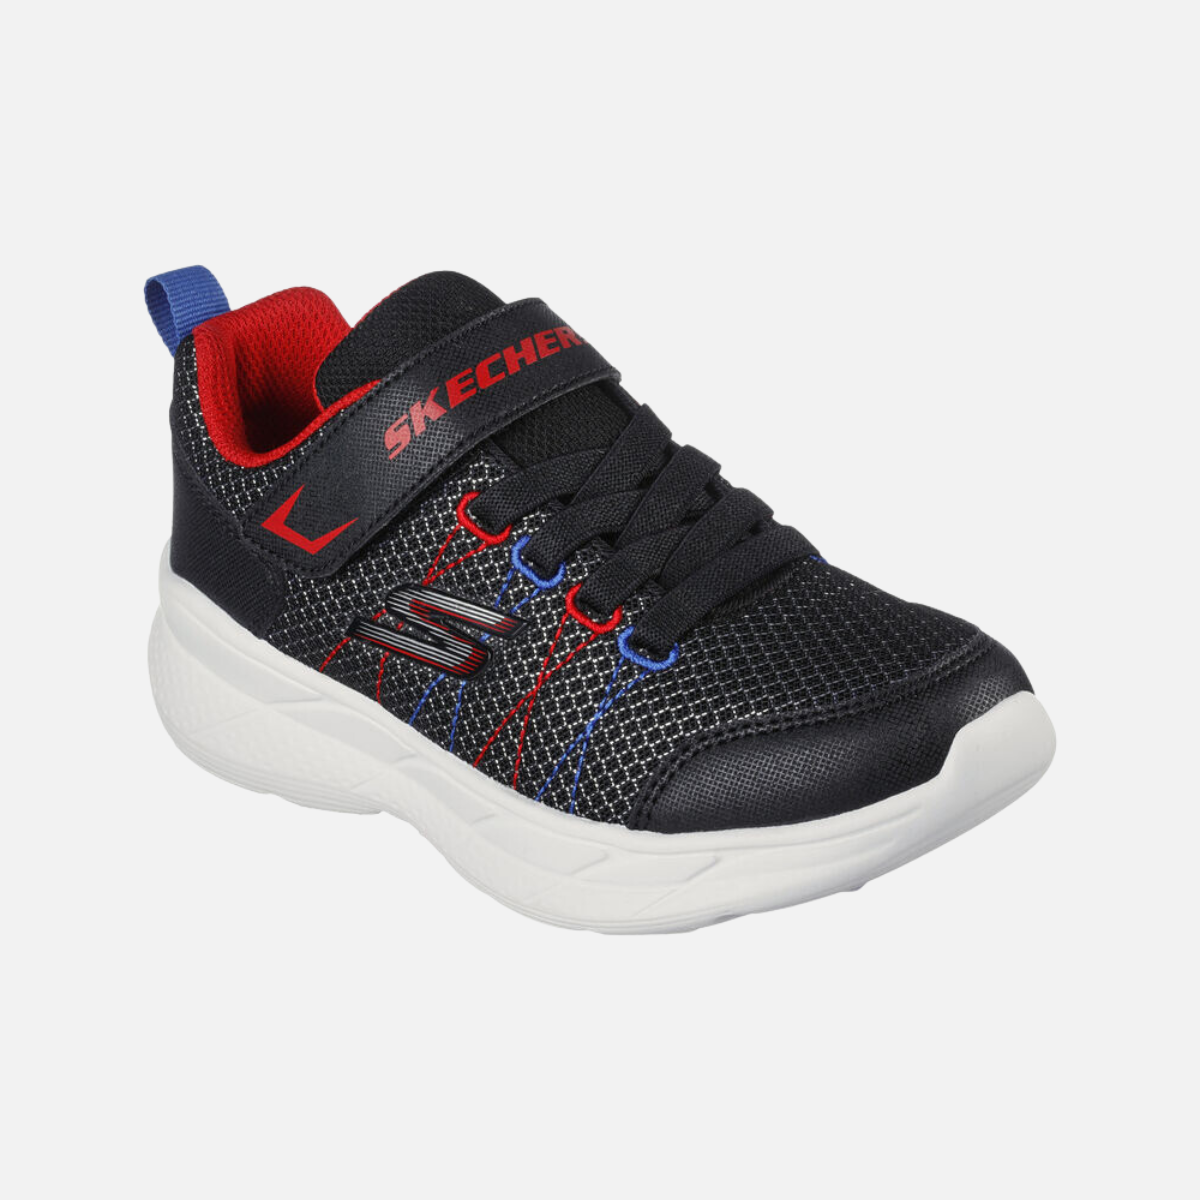 Skechers Snap Sprints 2.0 - Vargonix Kids Shoes (5-12 Year)-Black/Red/Blue